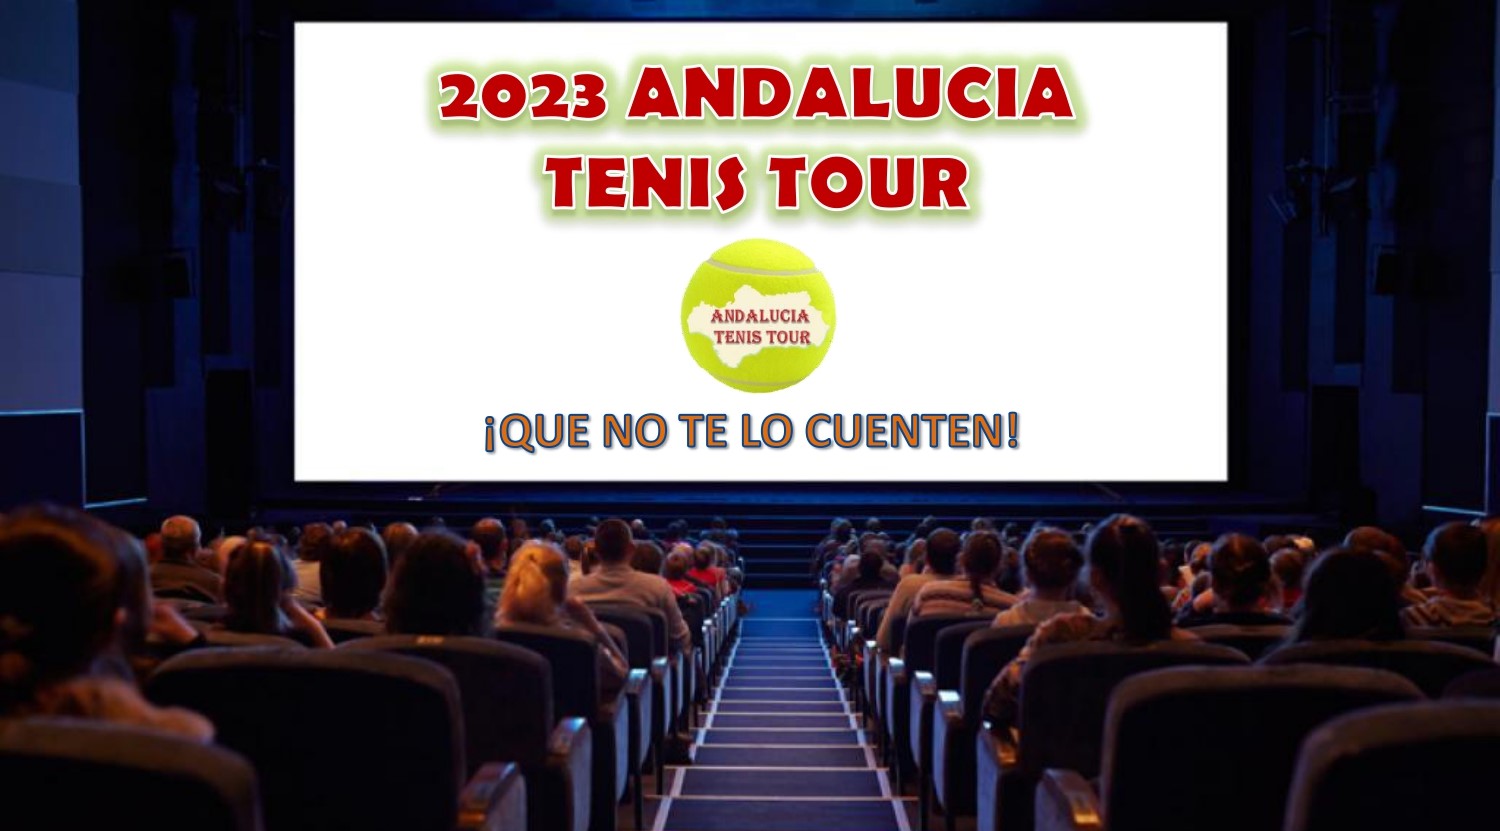 2023 ANDALUCIA TENIS TOUR. PRESENTACION